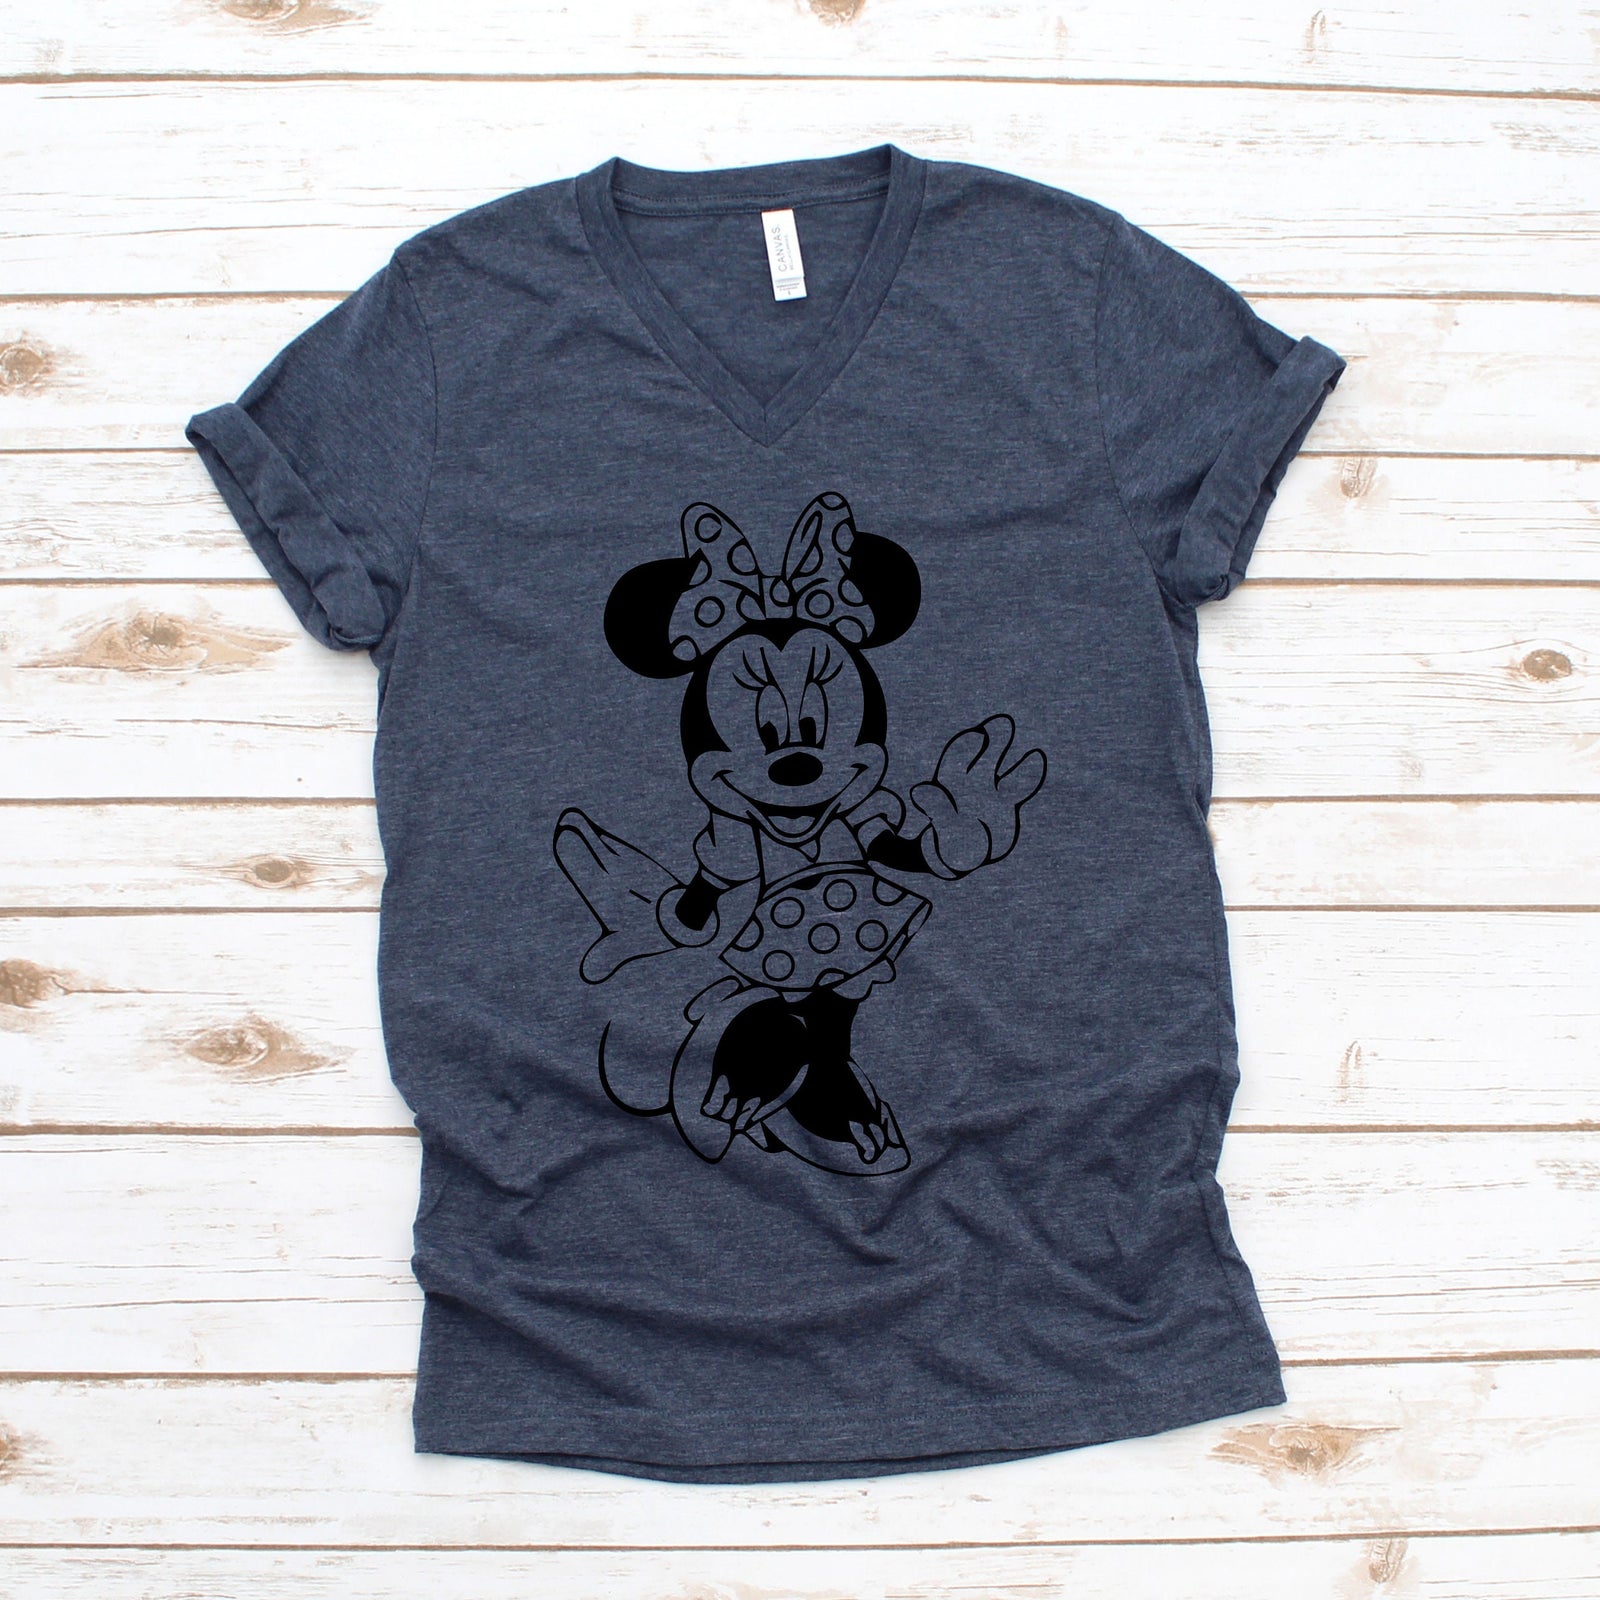 Full Body Minnie Mouse t shirt - Disney Trip Matching Shirts - Cute Minnie T Shirt